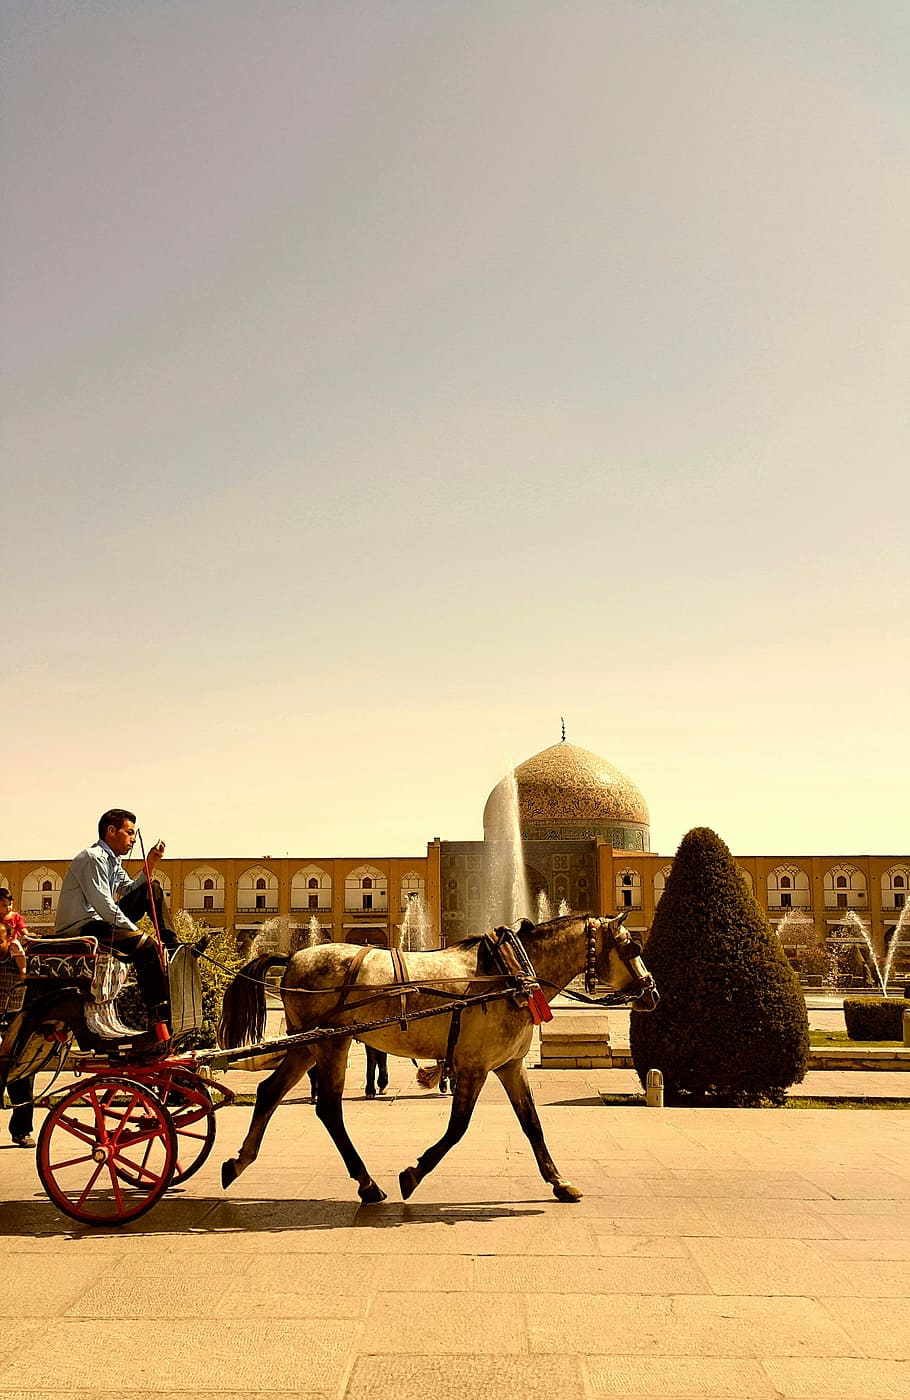 Iran, Isfahan, Carriage, Mosque, Tree, horse, warm, history